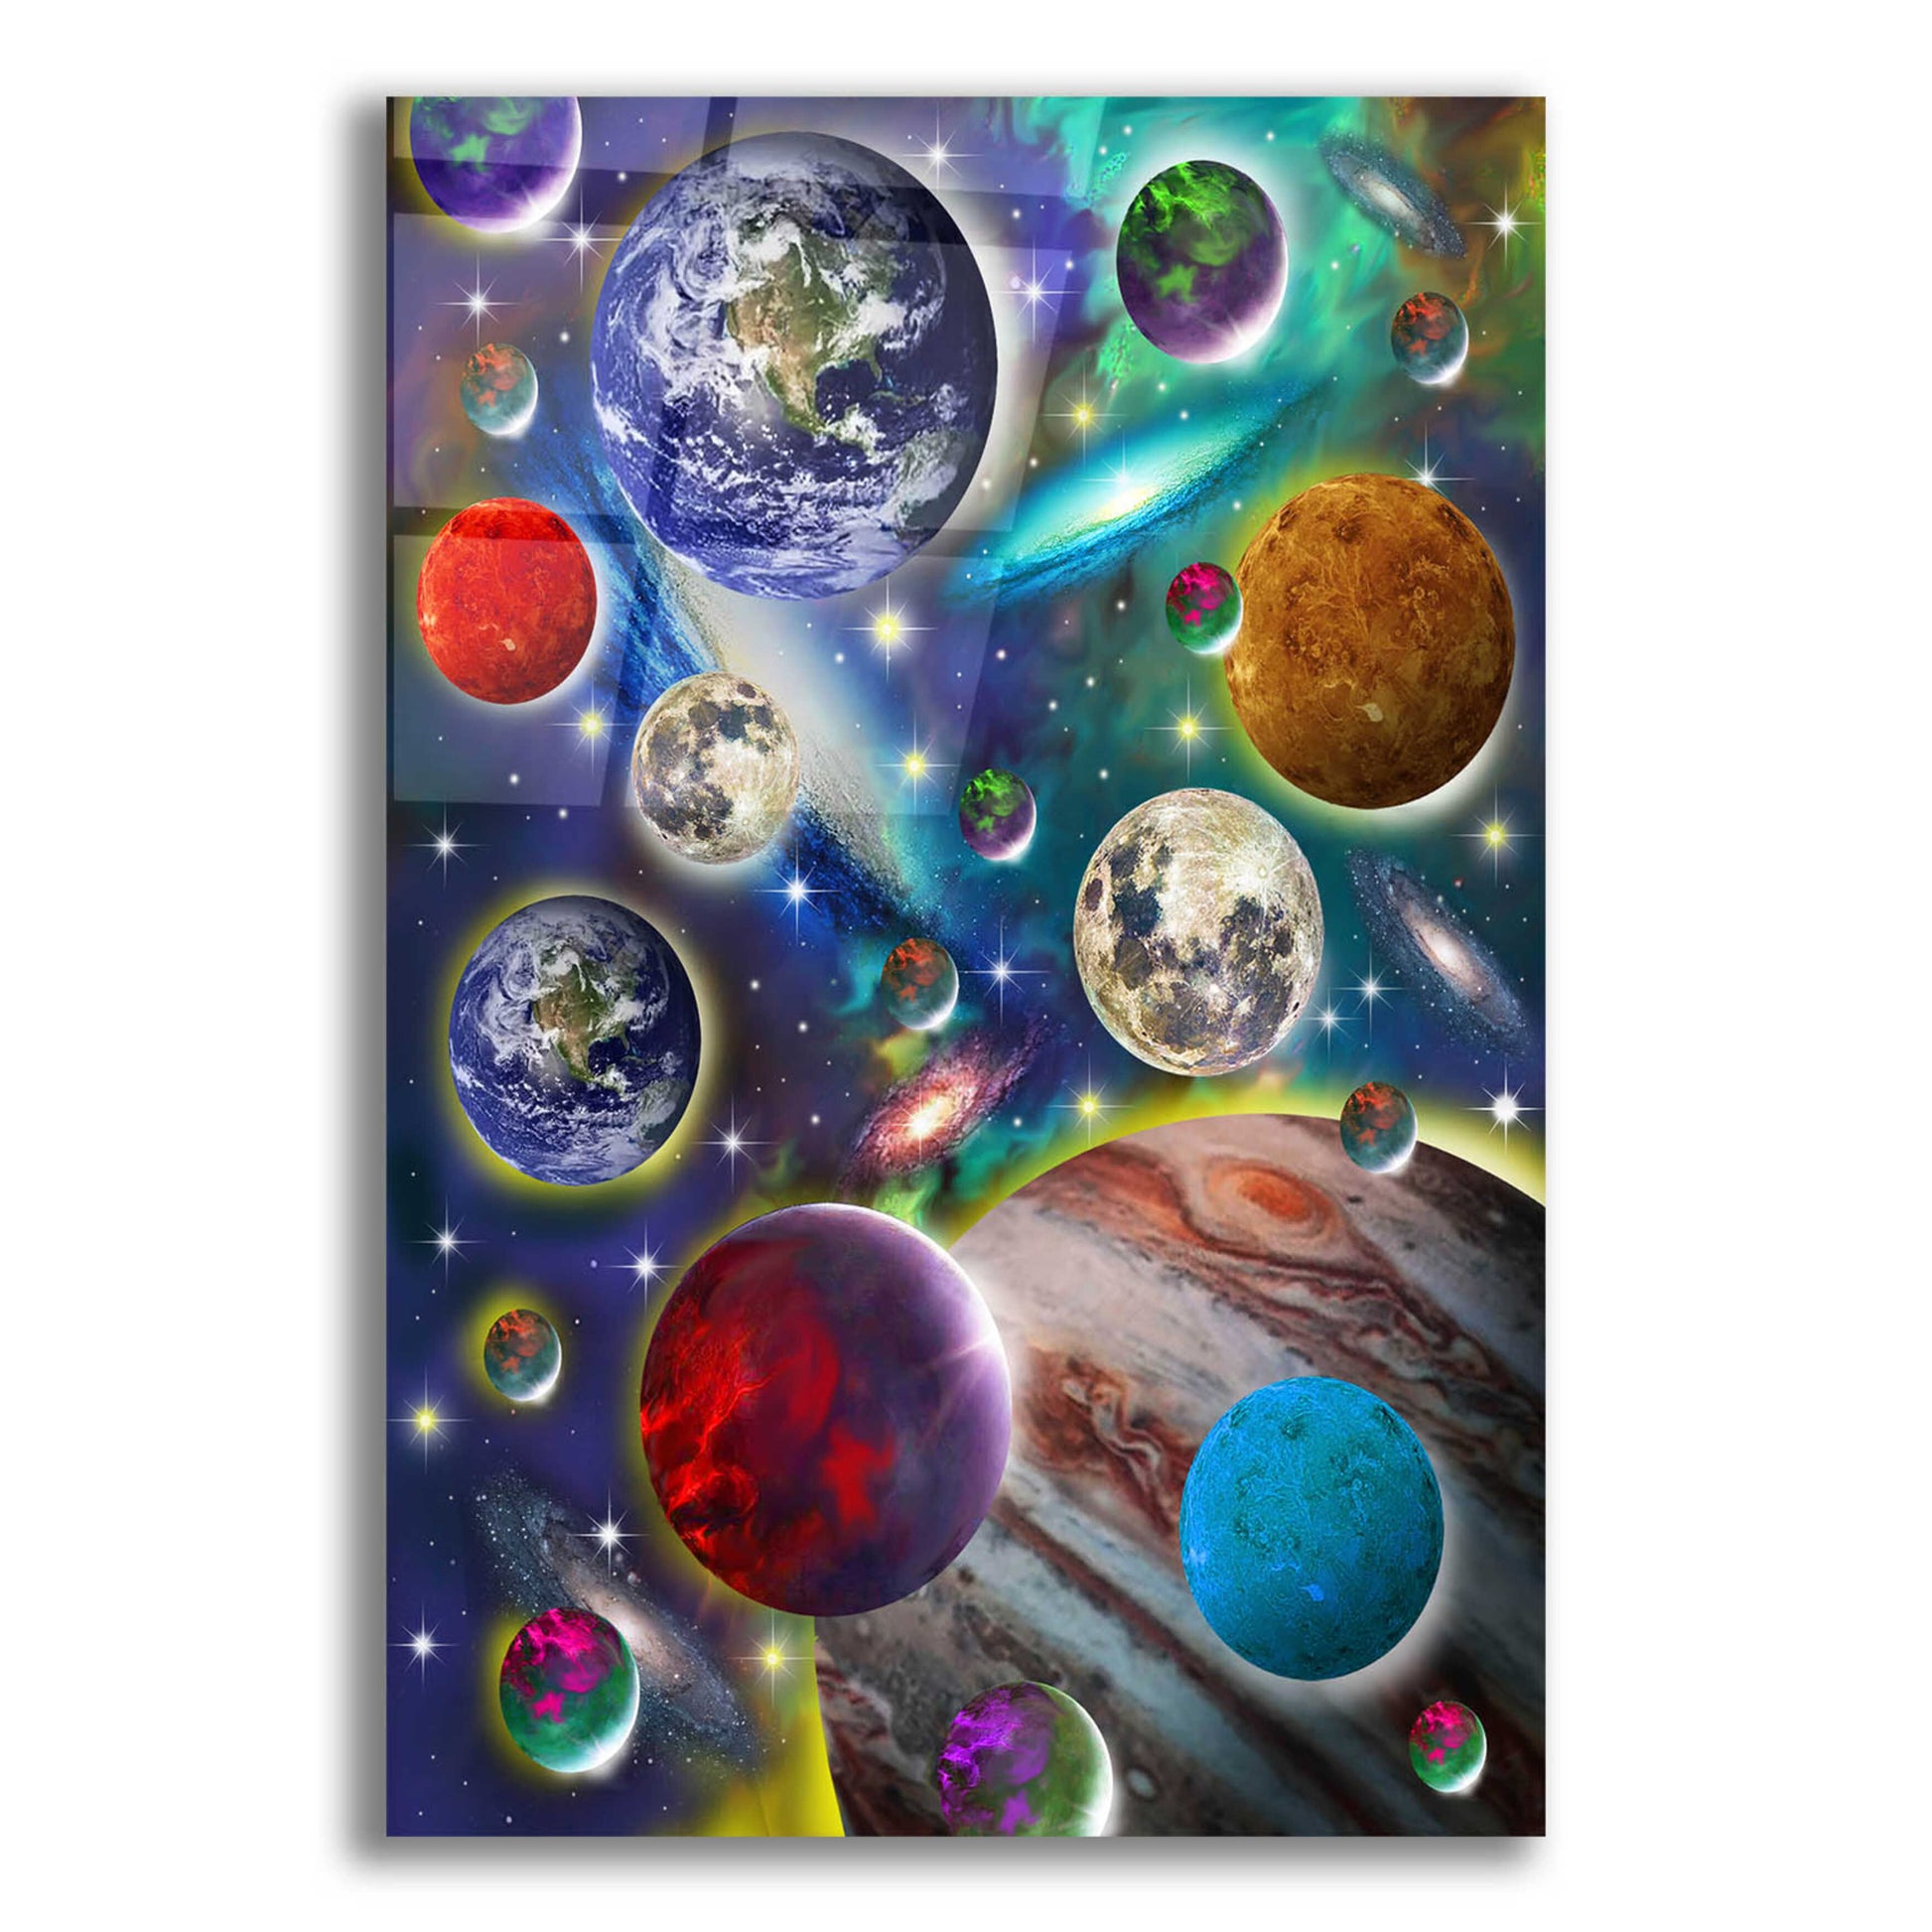 Epic Art 'Cosmic Planets' by Enright, Acrylic Glass Wall Art,12x16